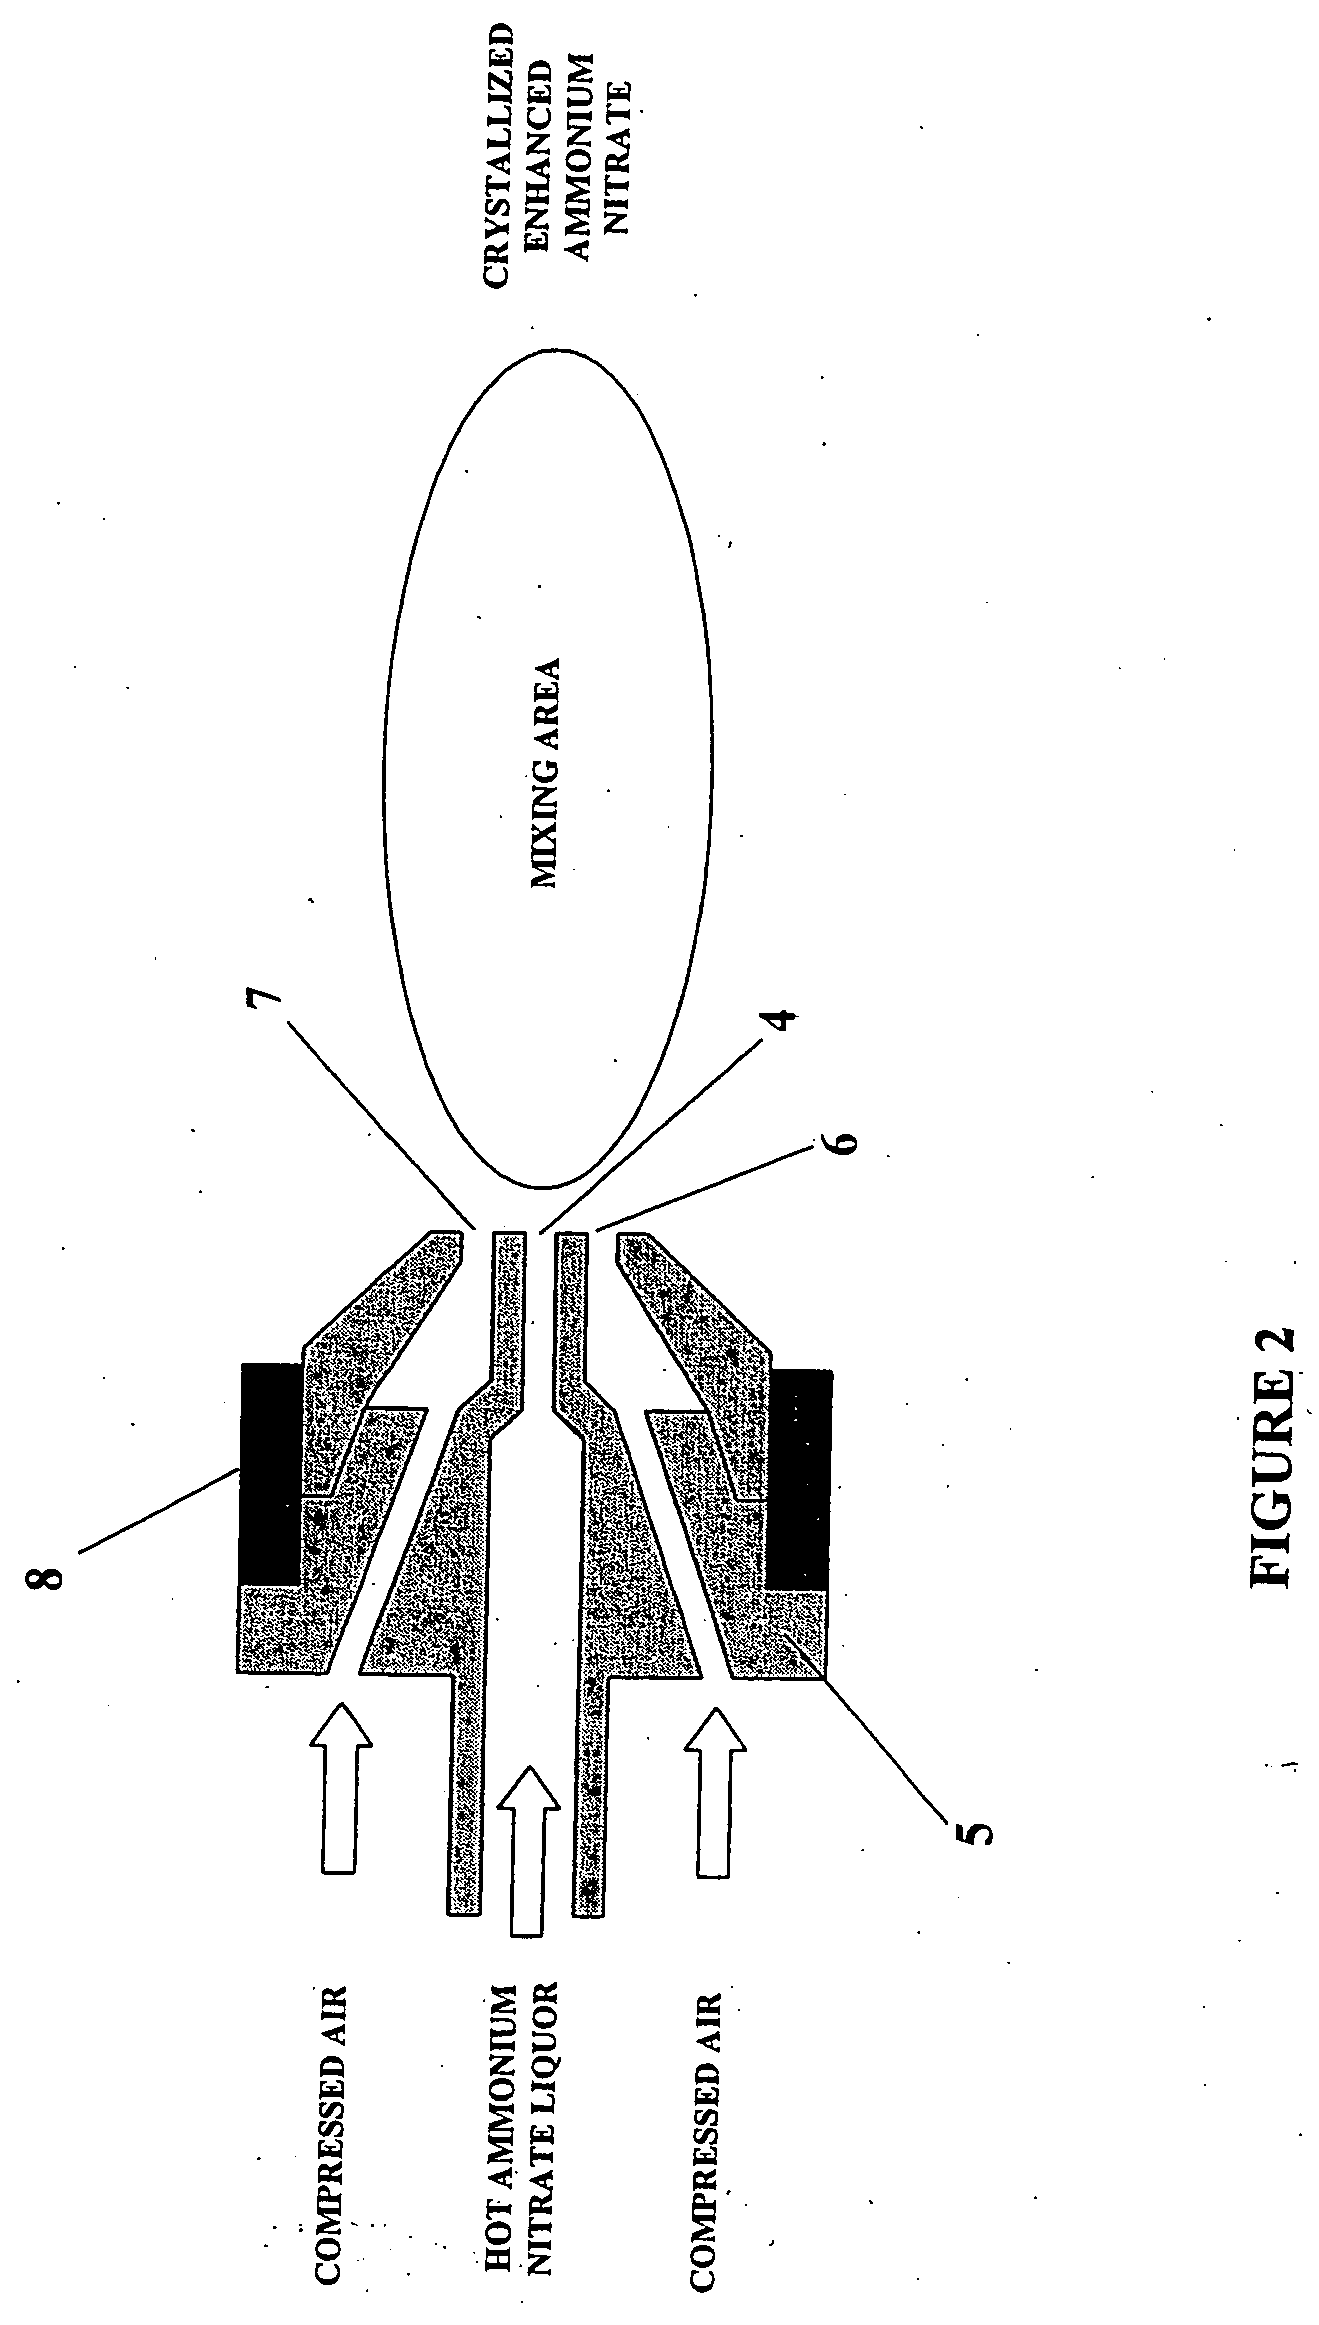 Ammonium nitrate blasting agent and method of production